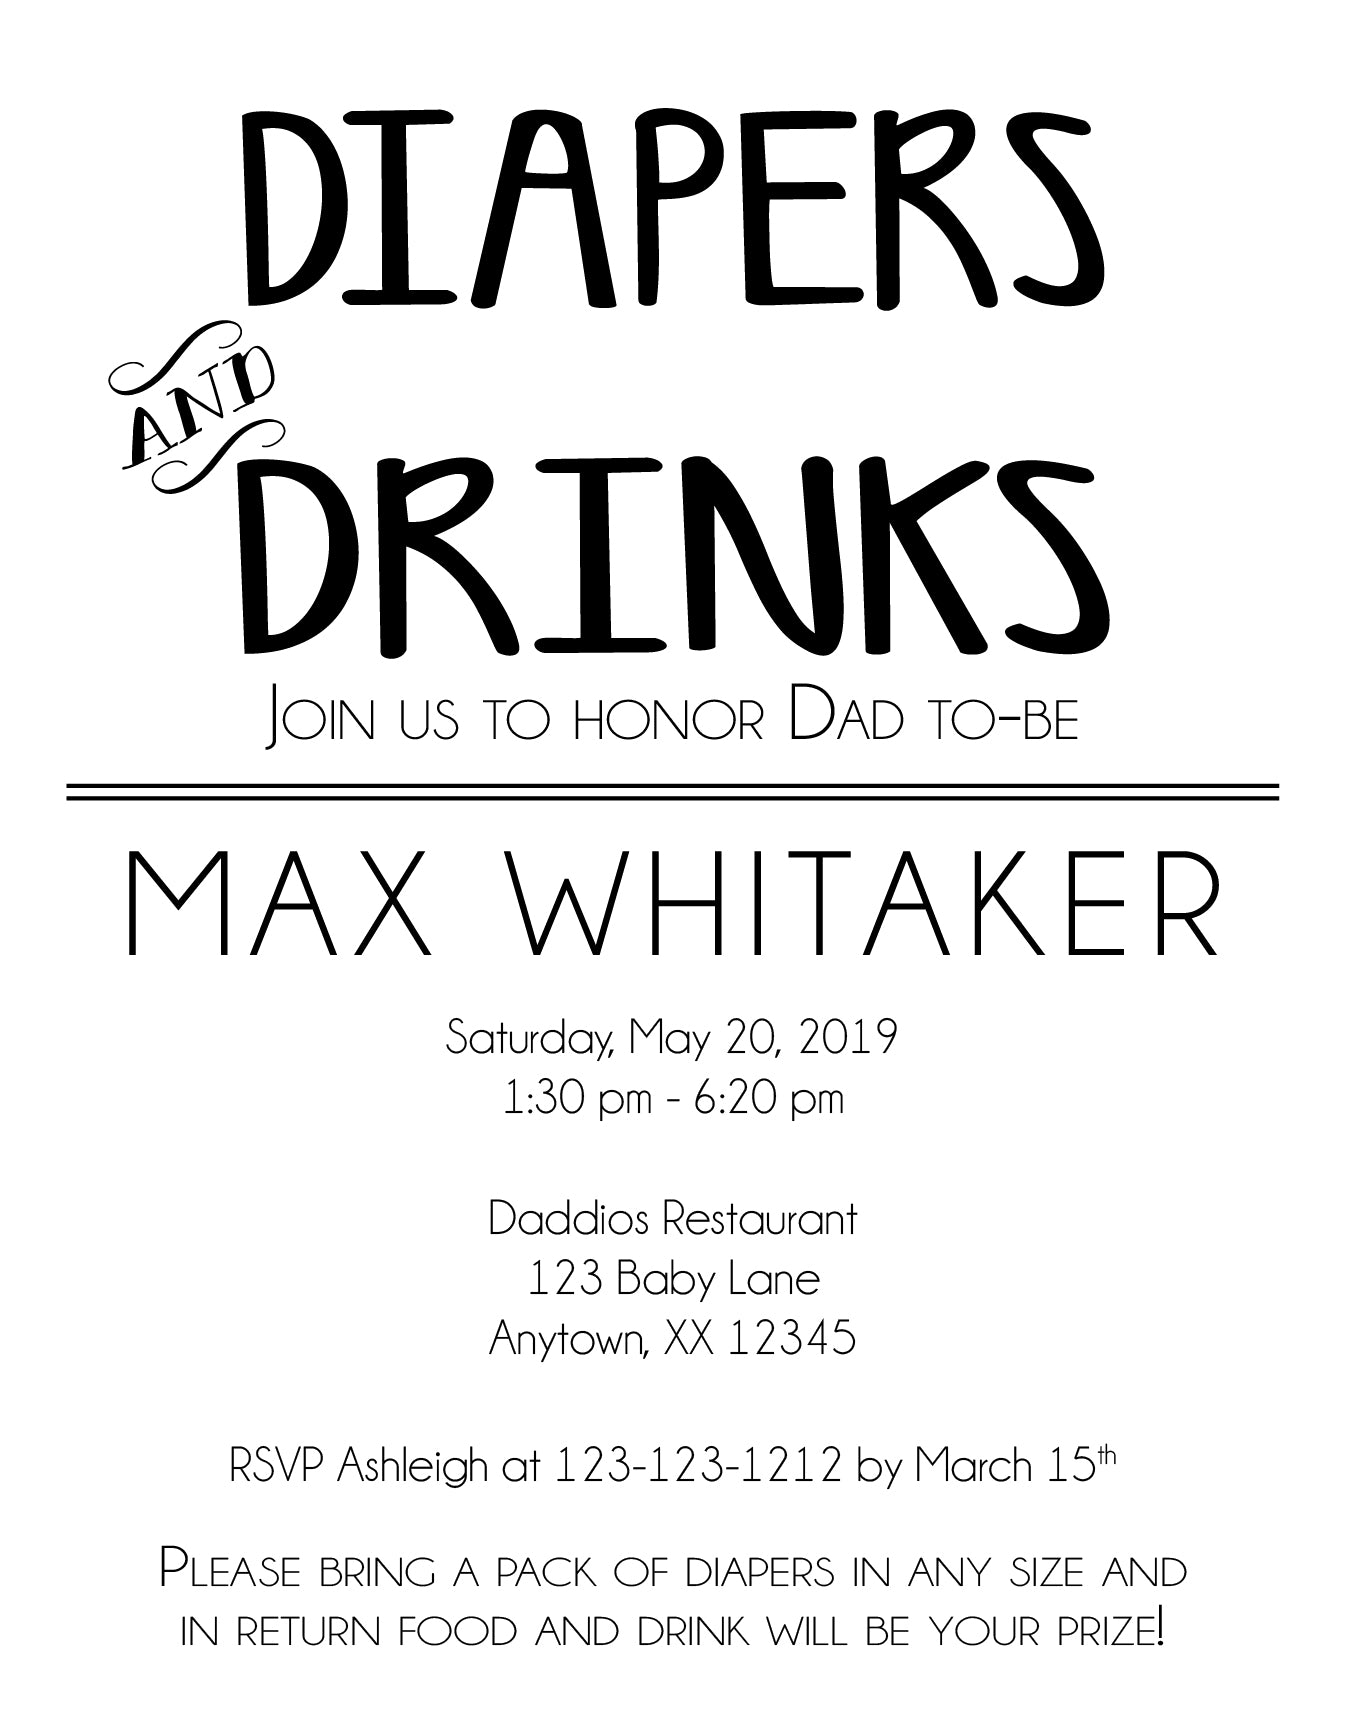 Diaper Drinks Baby Shower Invitations - Invitetique